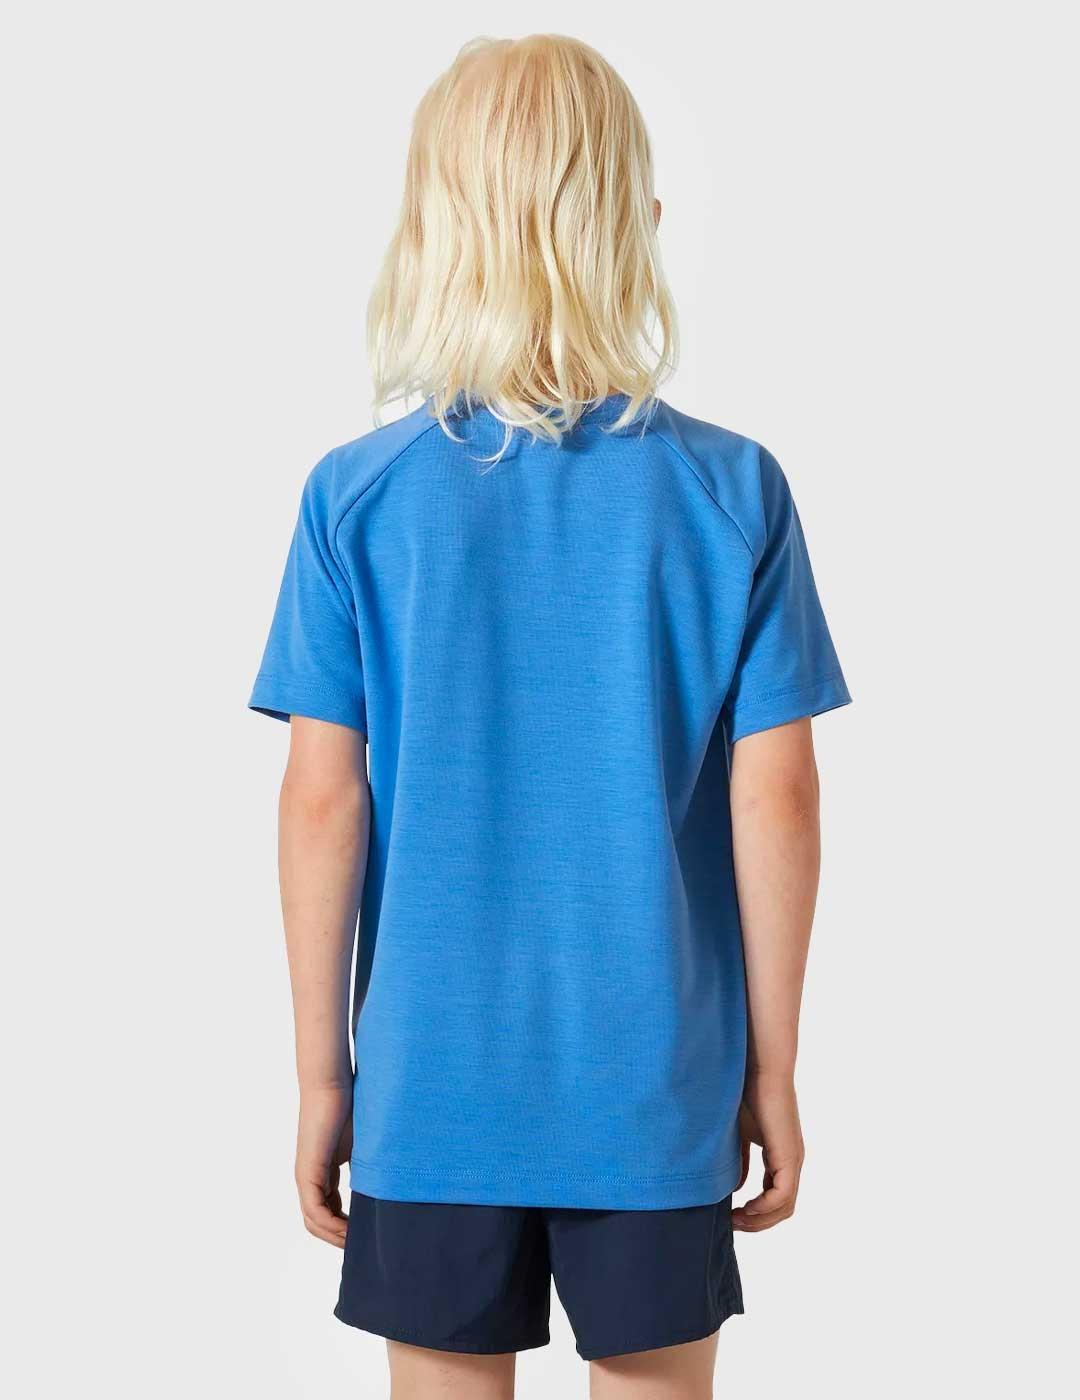 Camiseta Helly Hansen Port azul para niño y niña